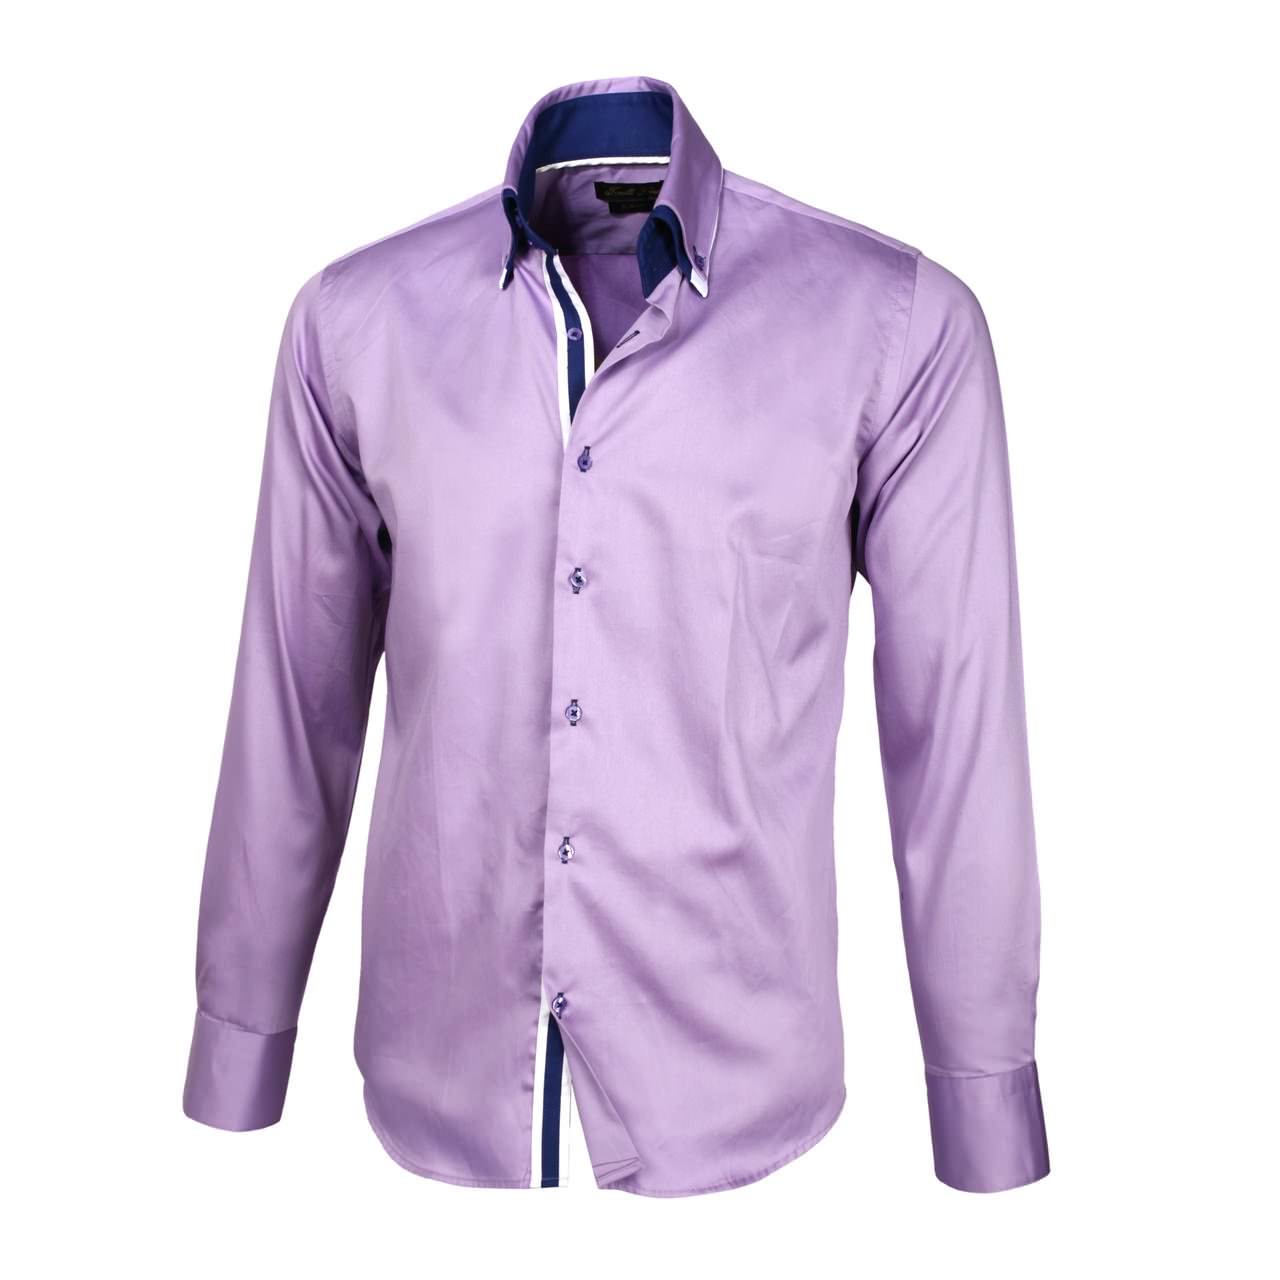 Озон интернет магазин рубашки. Валберис мужские рубашки. Mantaray Purple рубашка мужская. Рубашка Lee l66ndn52. Красивые рубашки для мужчин.